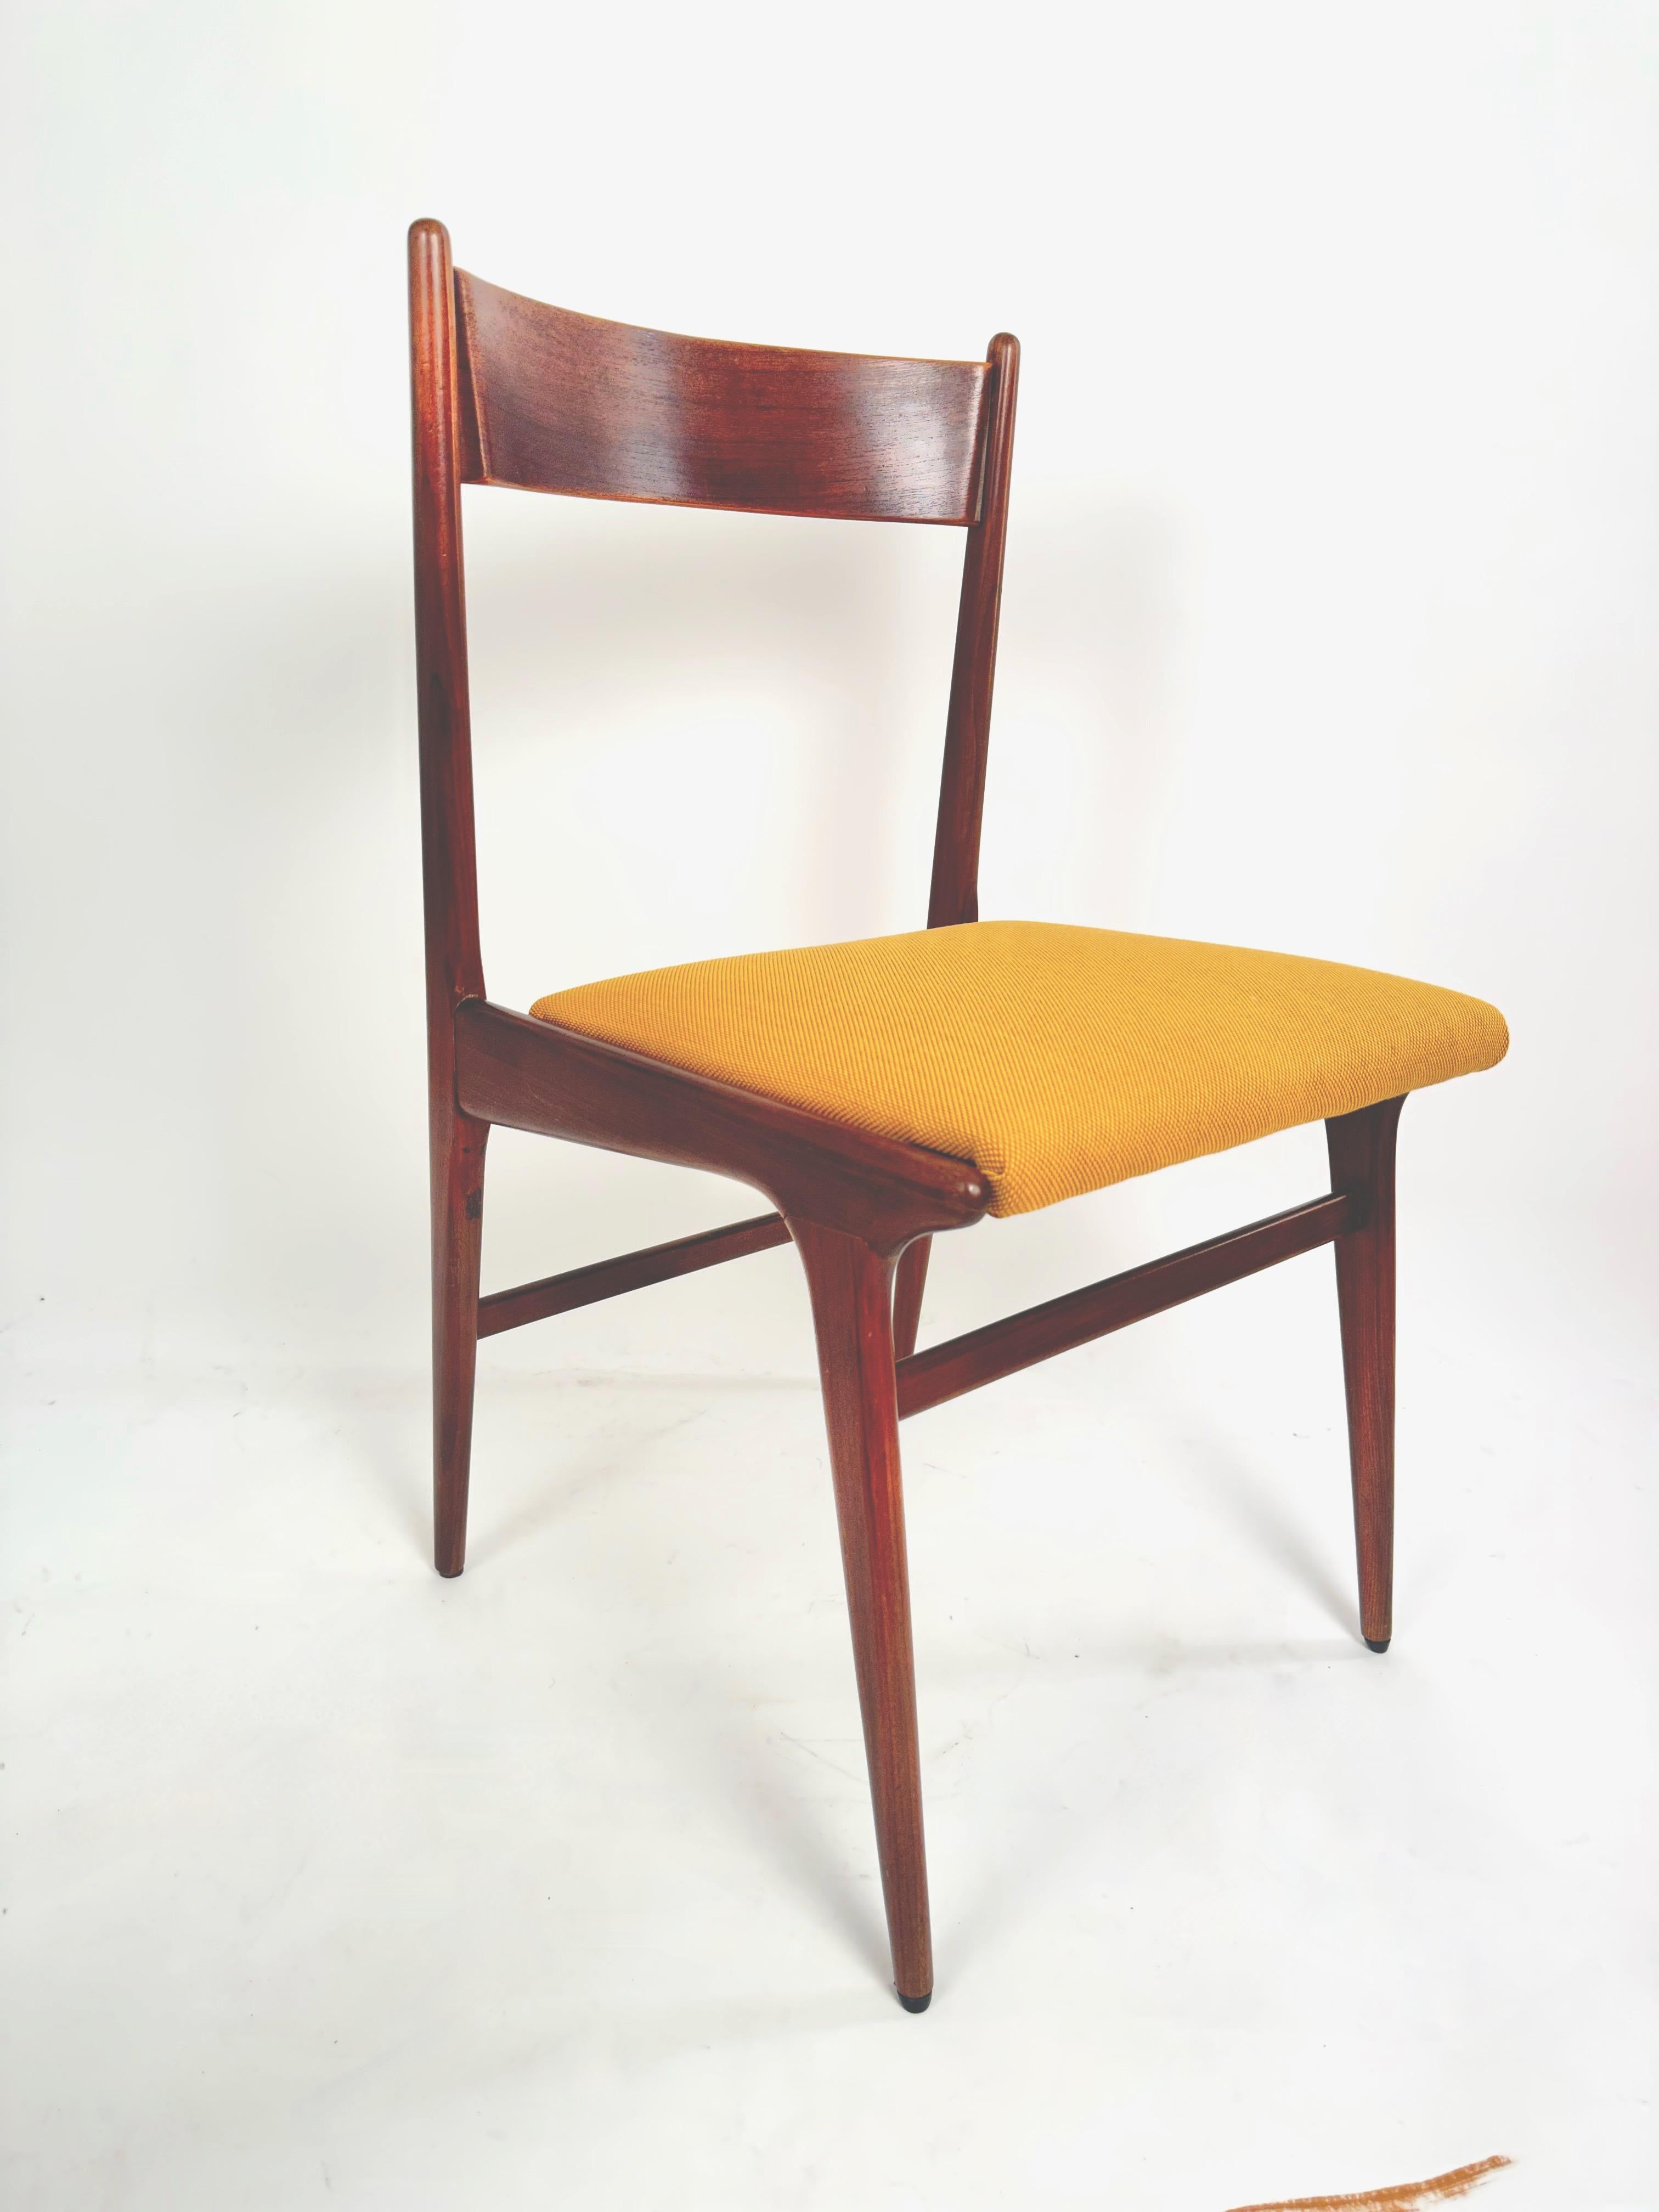 Carlo de Carli MidSet of Four Teak Dining Chairs in Kvadrat Yello Fabric, 1960s For Sale 10